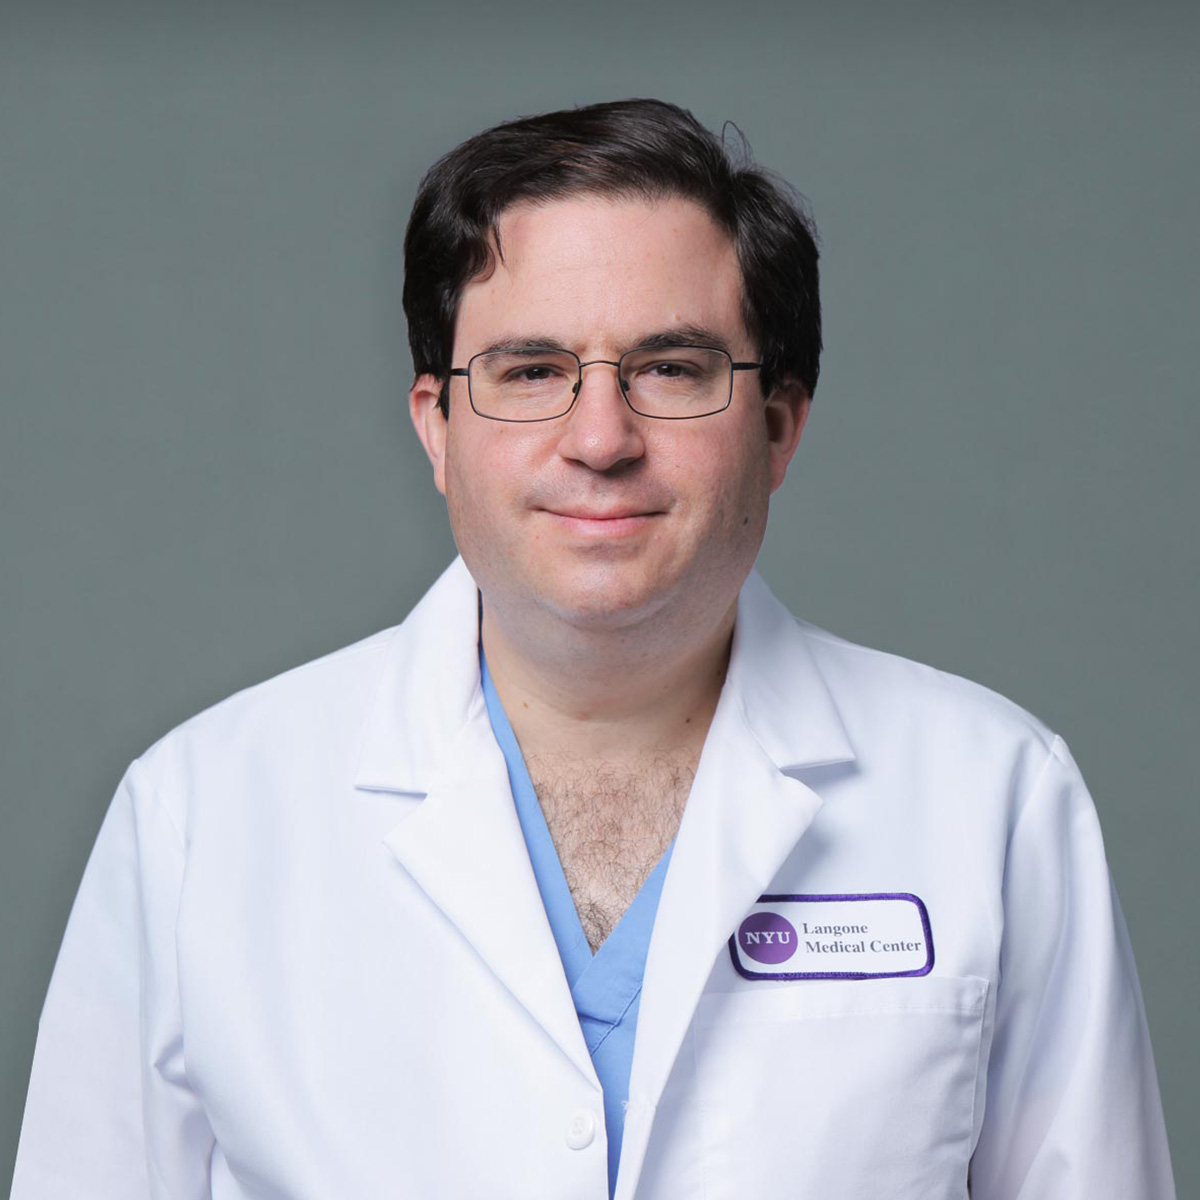 Robert M. Applebaum,MD. Cardiology, Echocardiography